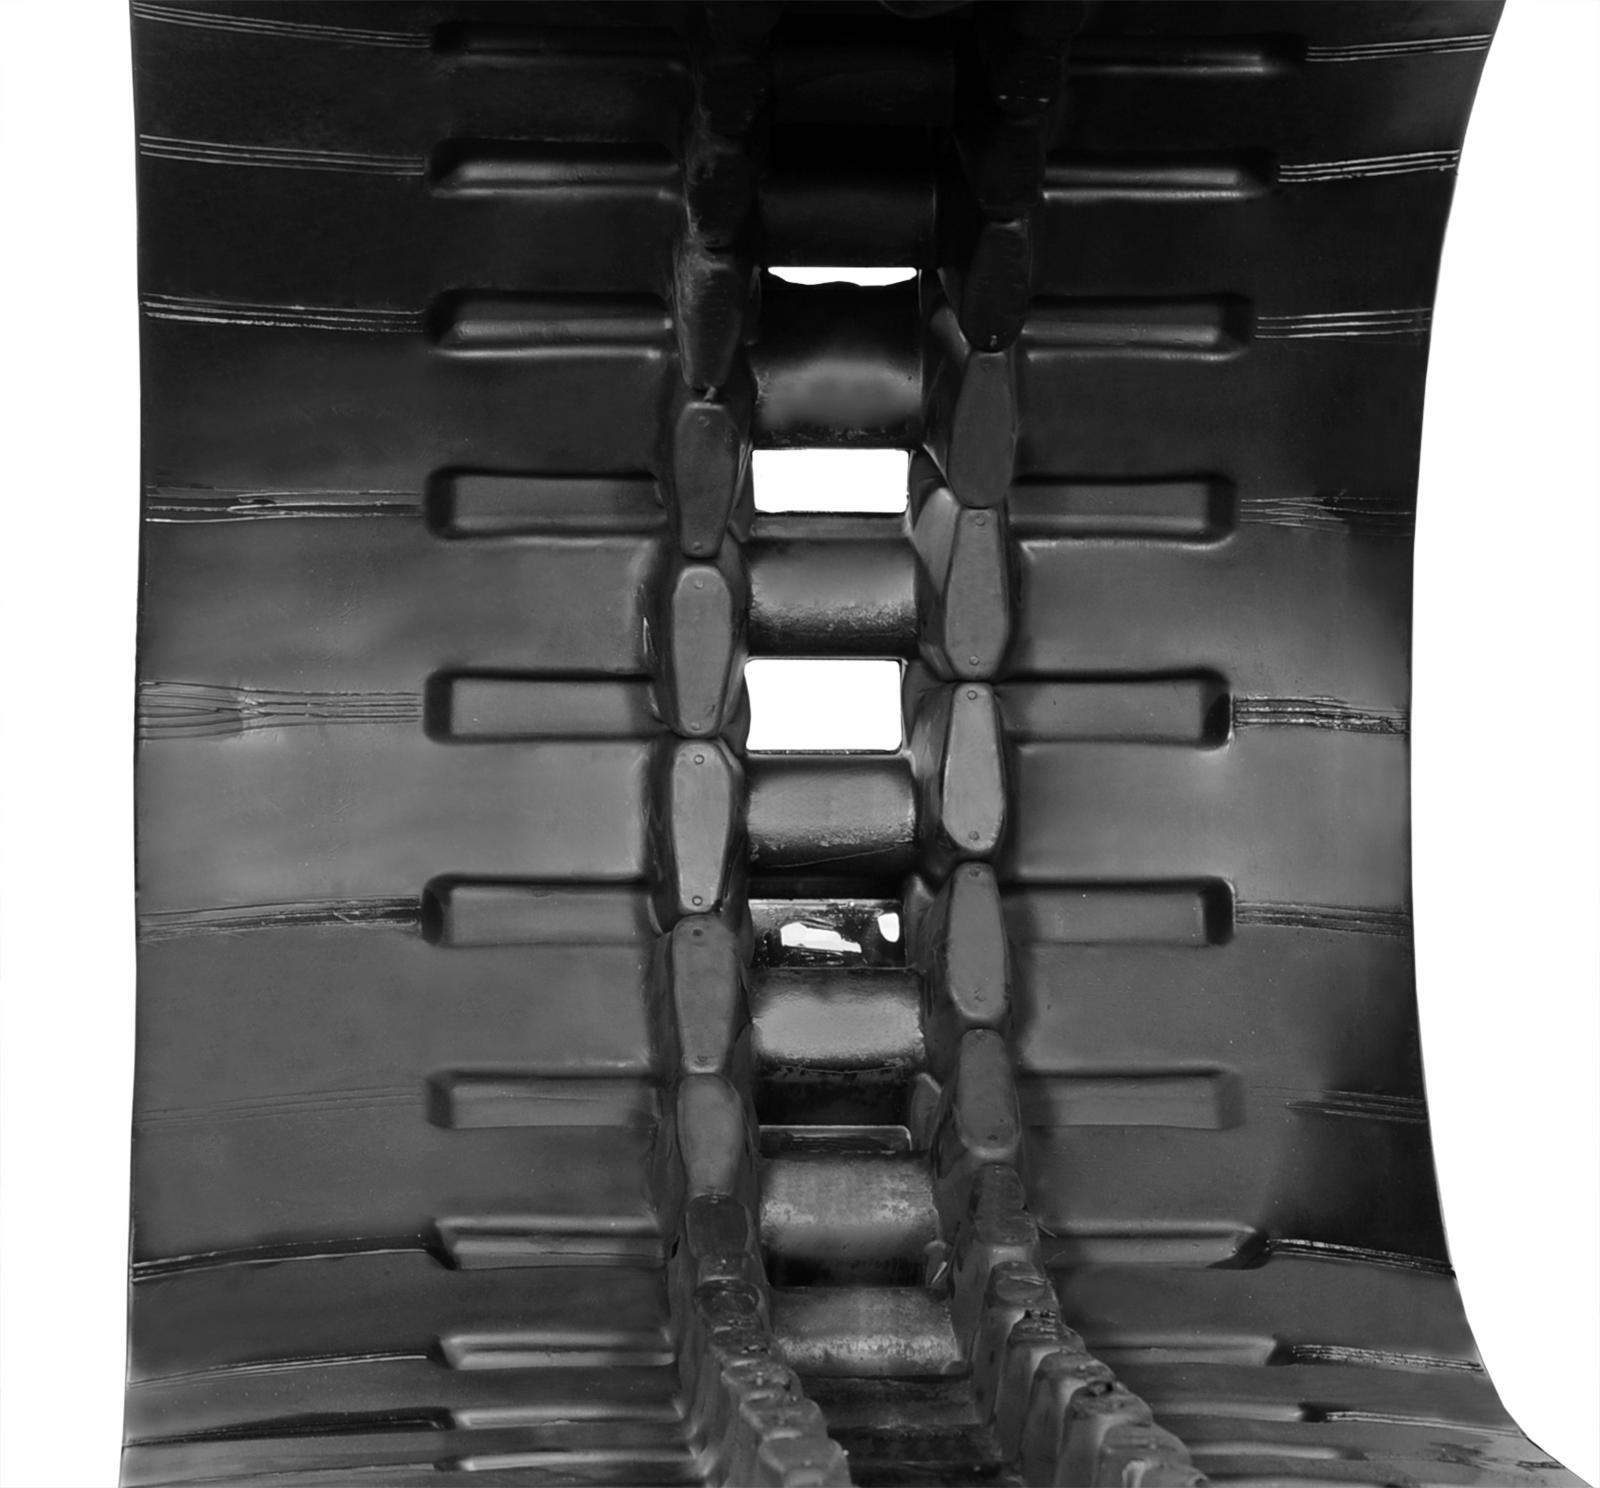 set of 2 19" heavy duty rubber track (485x92x72)